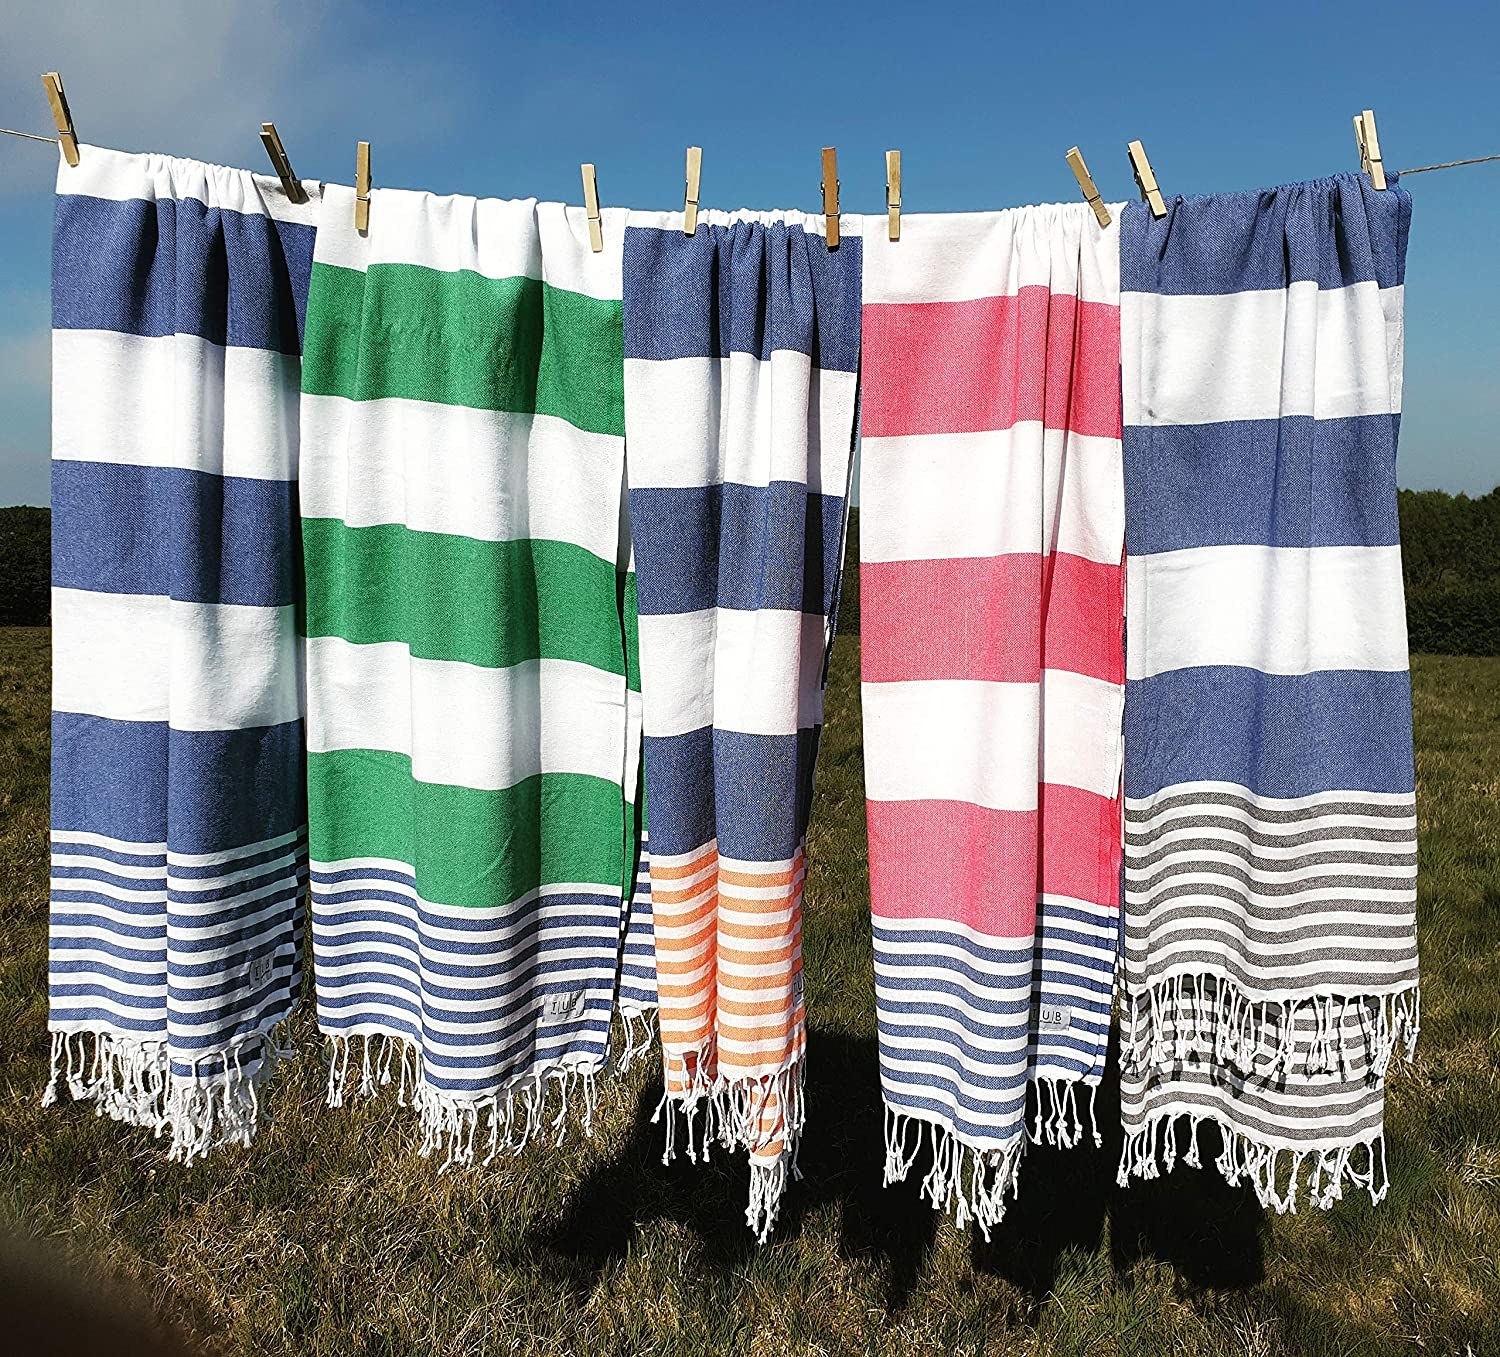 Turkish towels